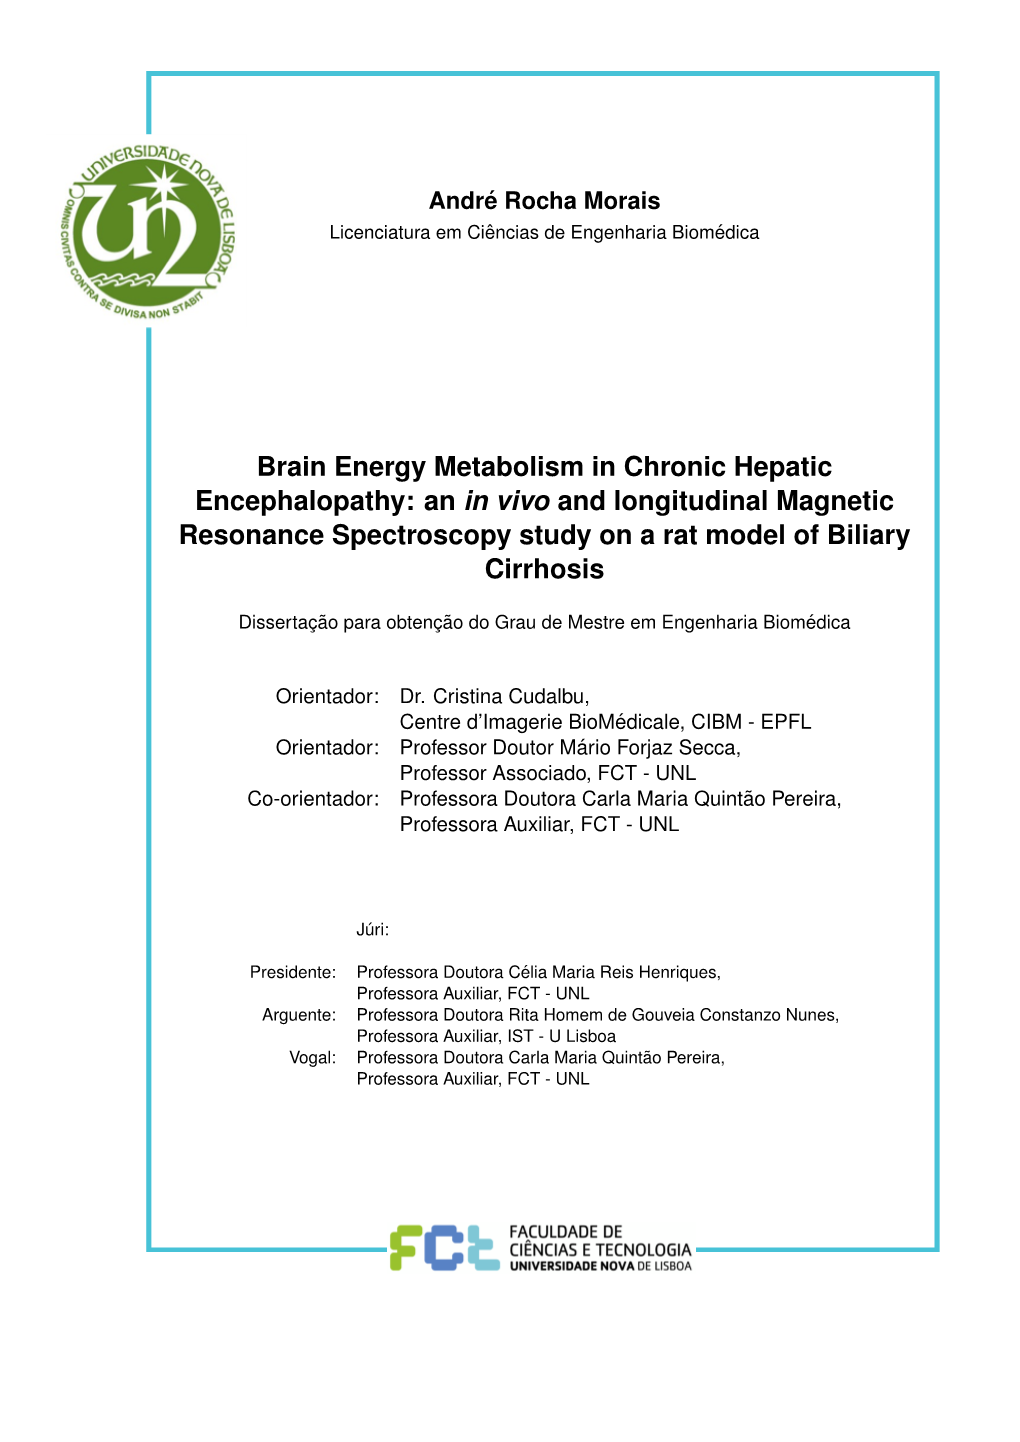 Brain Energy Metabolism in Chronic Hepatic Encephalopathy: an in Vivo and Longitudinal Magnetic Resonance Spectroscopy Study on a Rat Model of Biliary Cirrhosis